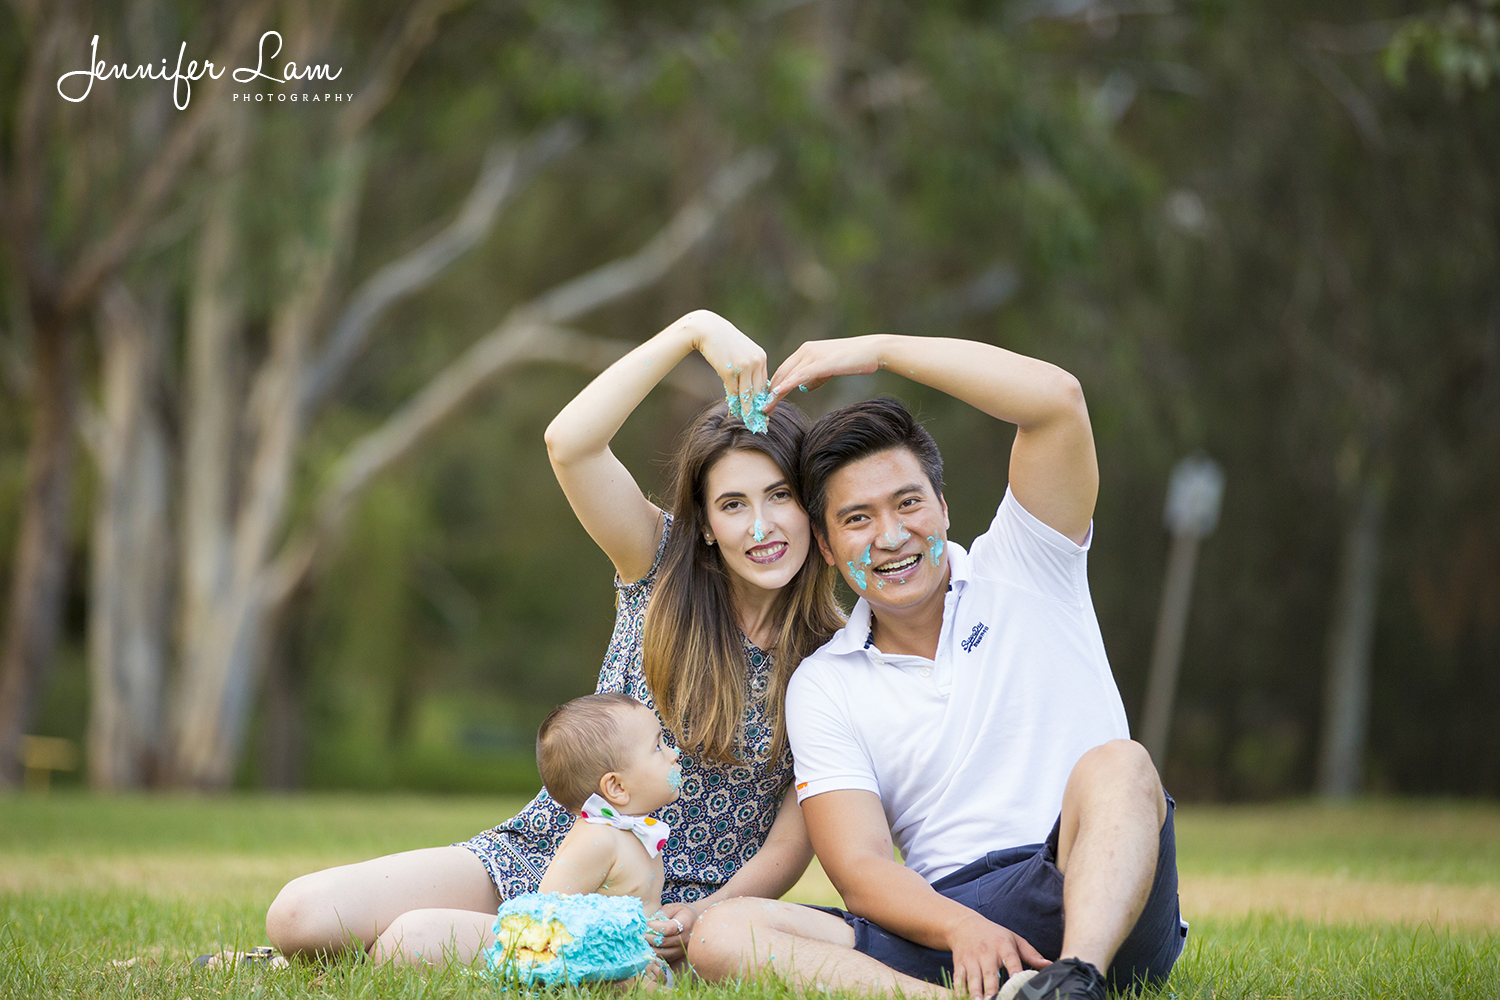 Cameron's 1st Birthday - Family Portrait Photography - Jennifer Lam Photography - Sydney - Australia